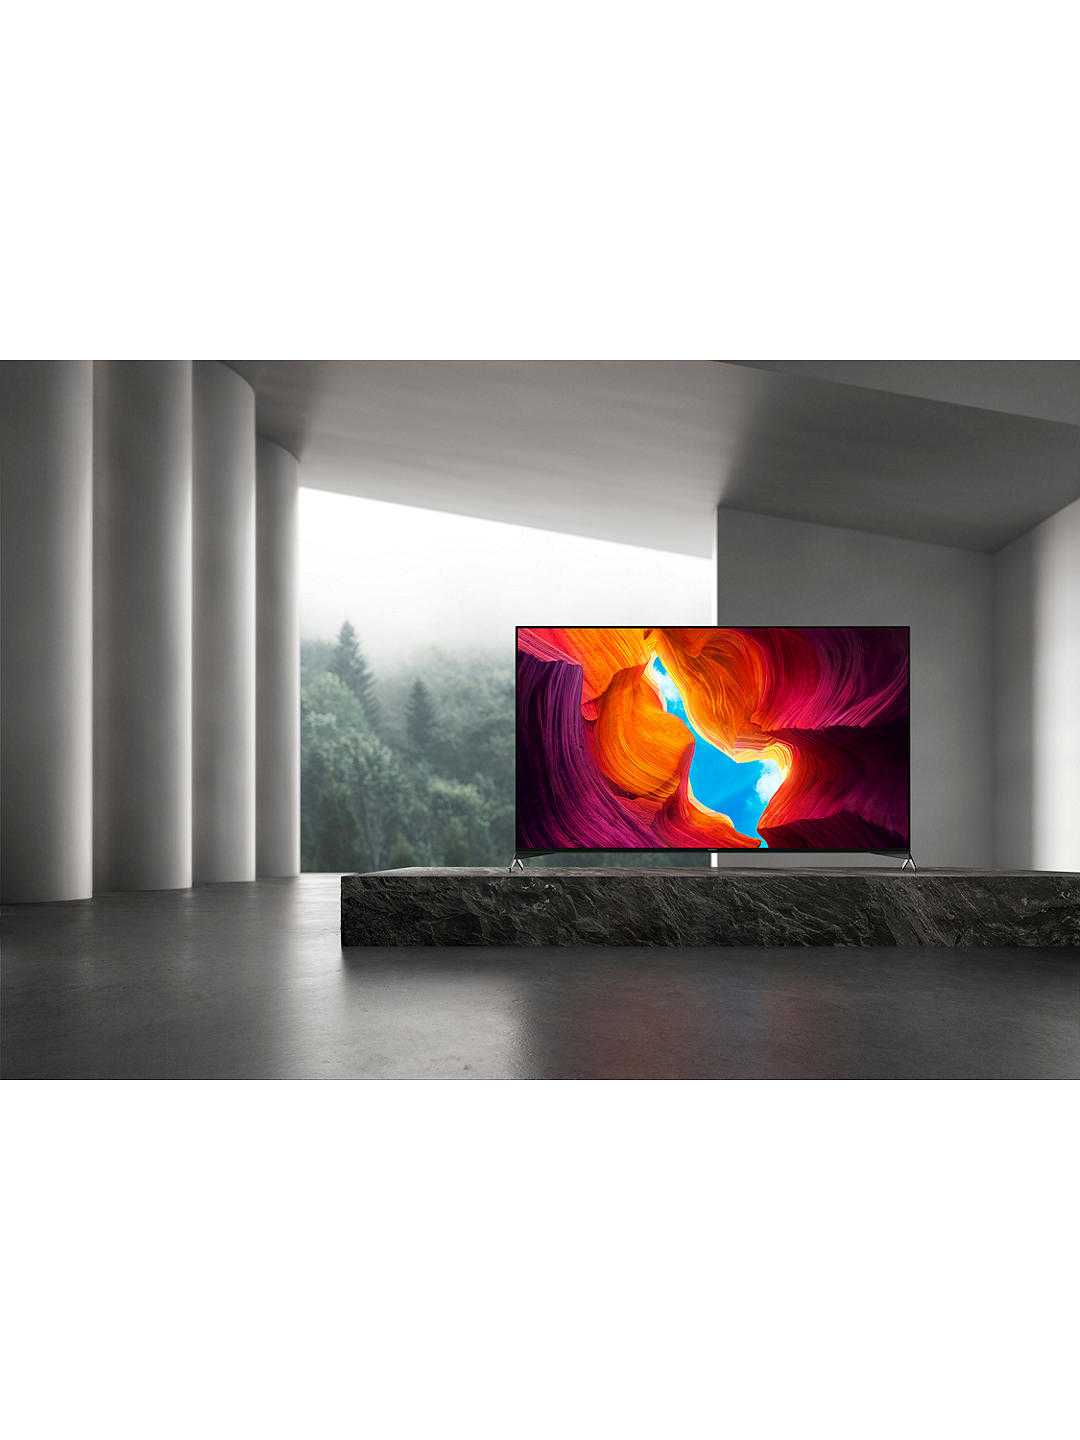 Обзор uhd 4k телевизора sony kd-55xh9505. модель 2020 года. - выбор телевизора